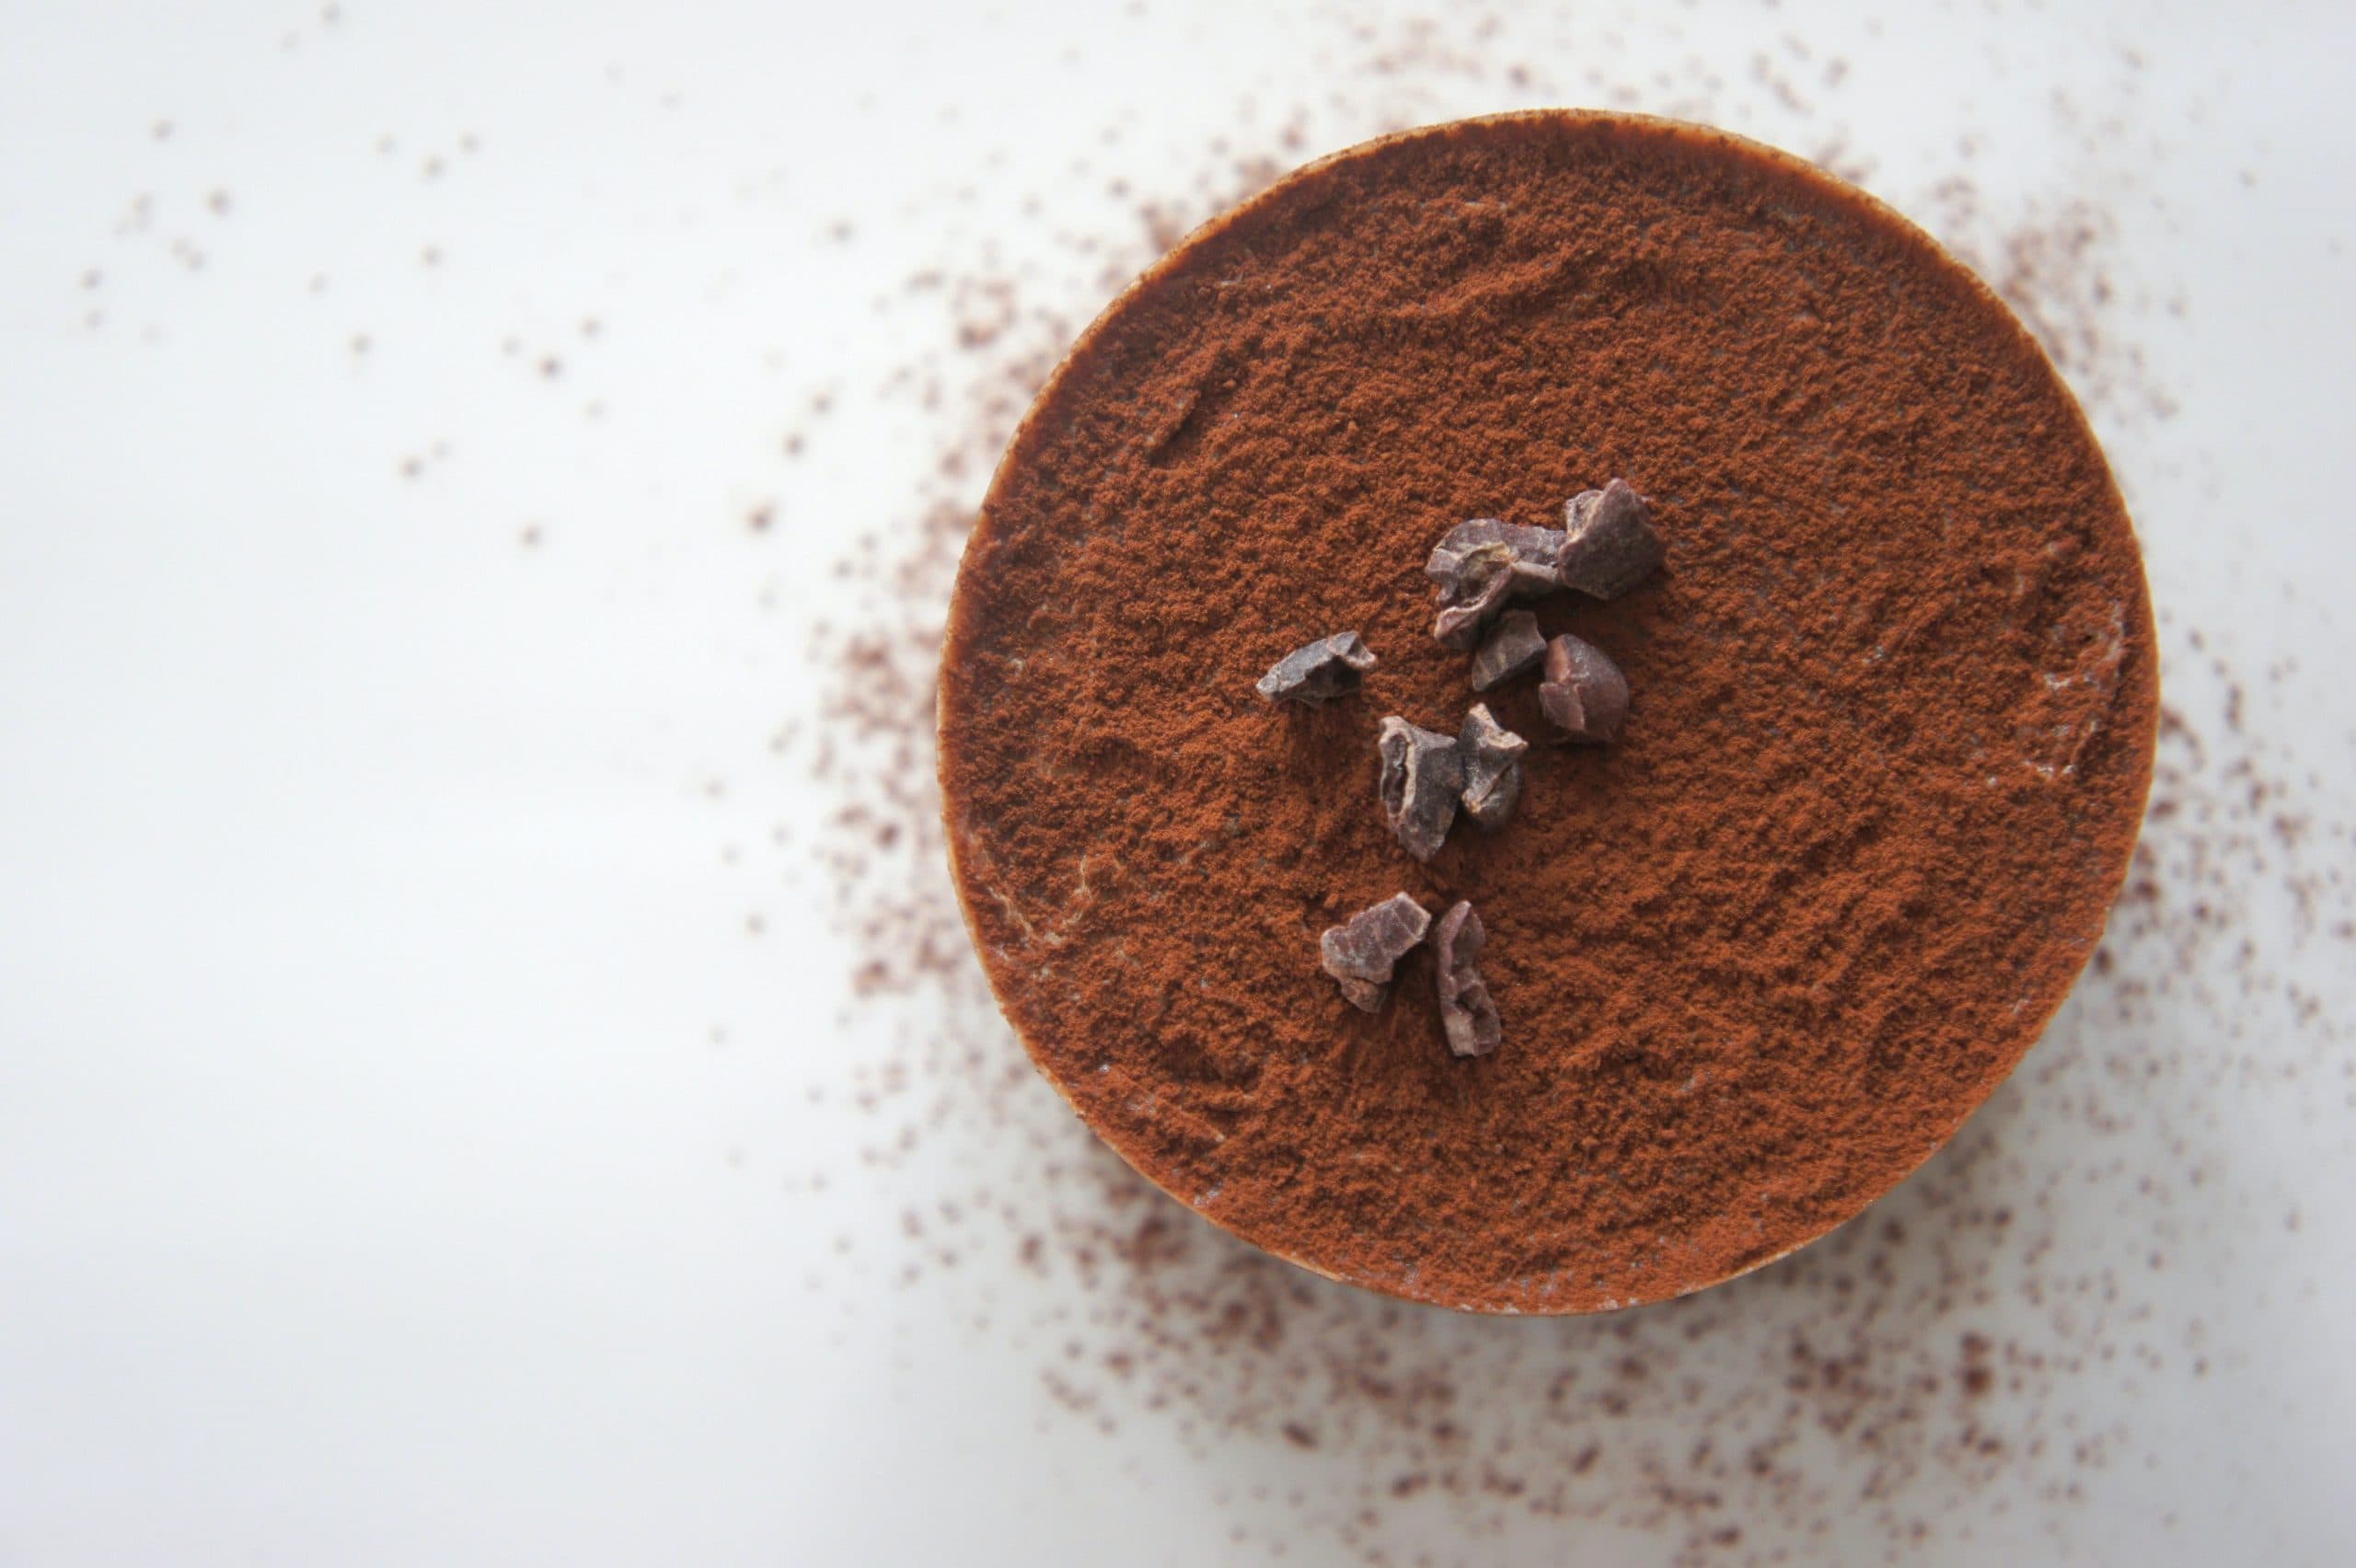 Making cocoa powder